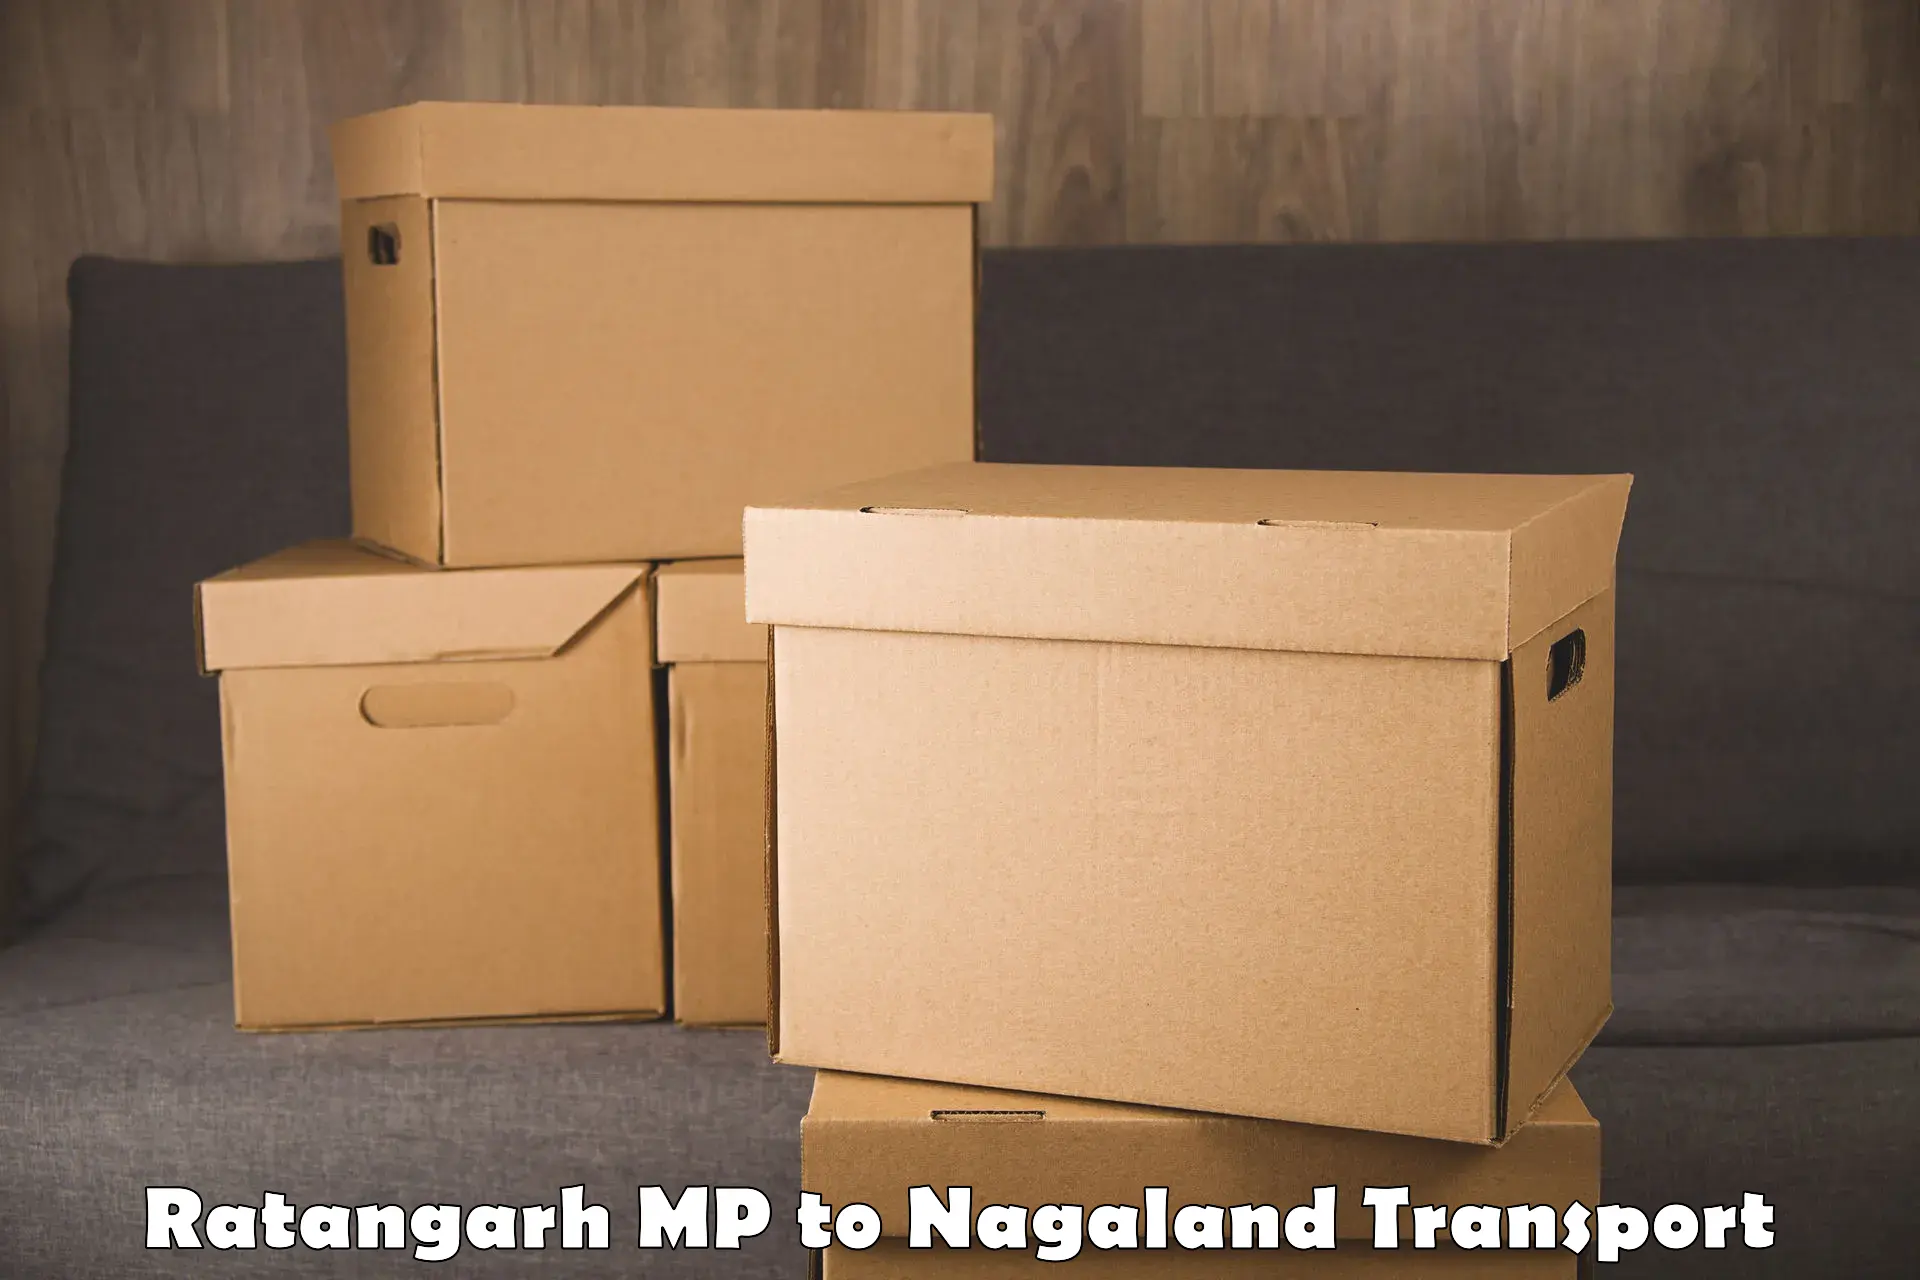 Bike shipping service Ratangarh MP to Nagaland